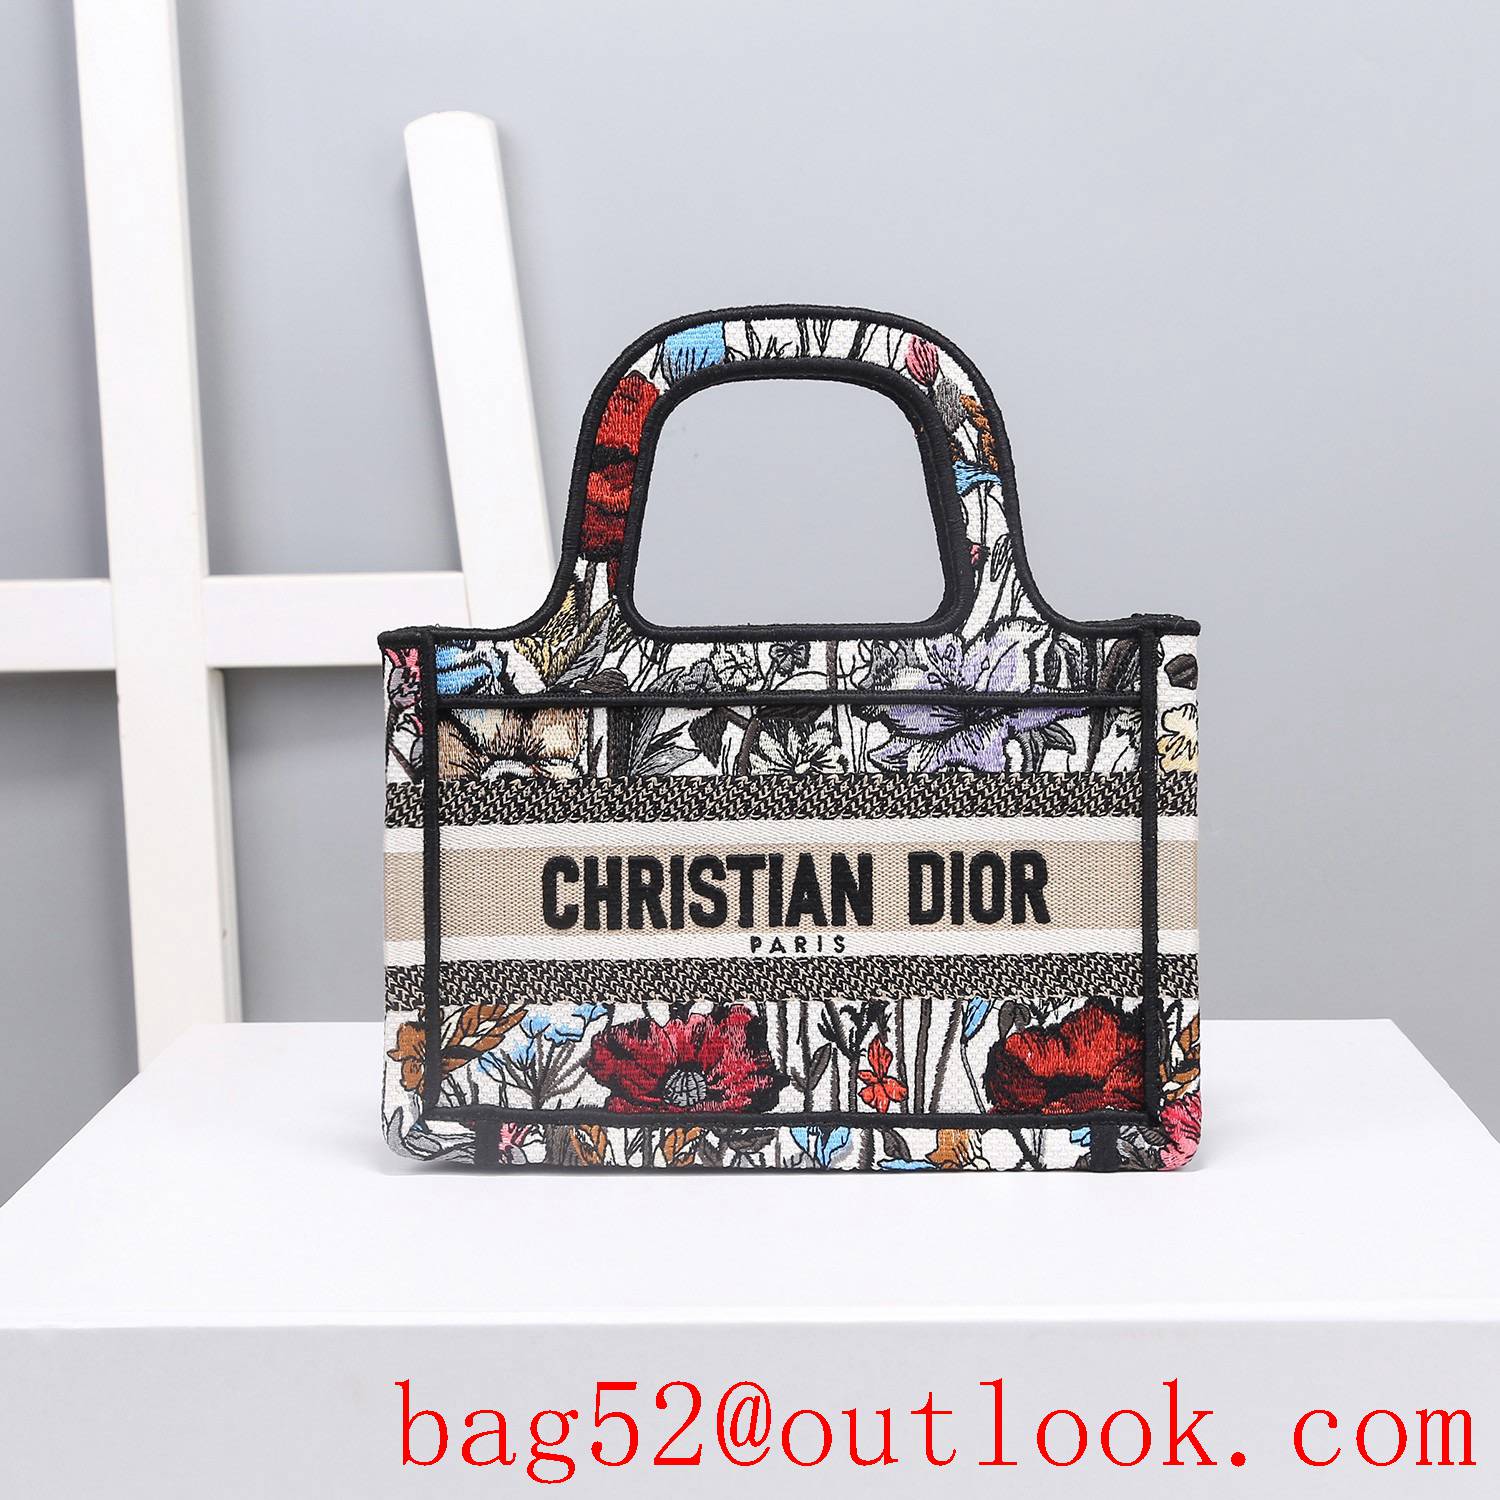 Dior Playful flower embroidery pastoral book tote handbag small bag